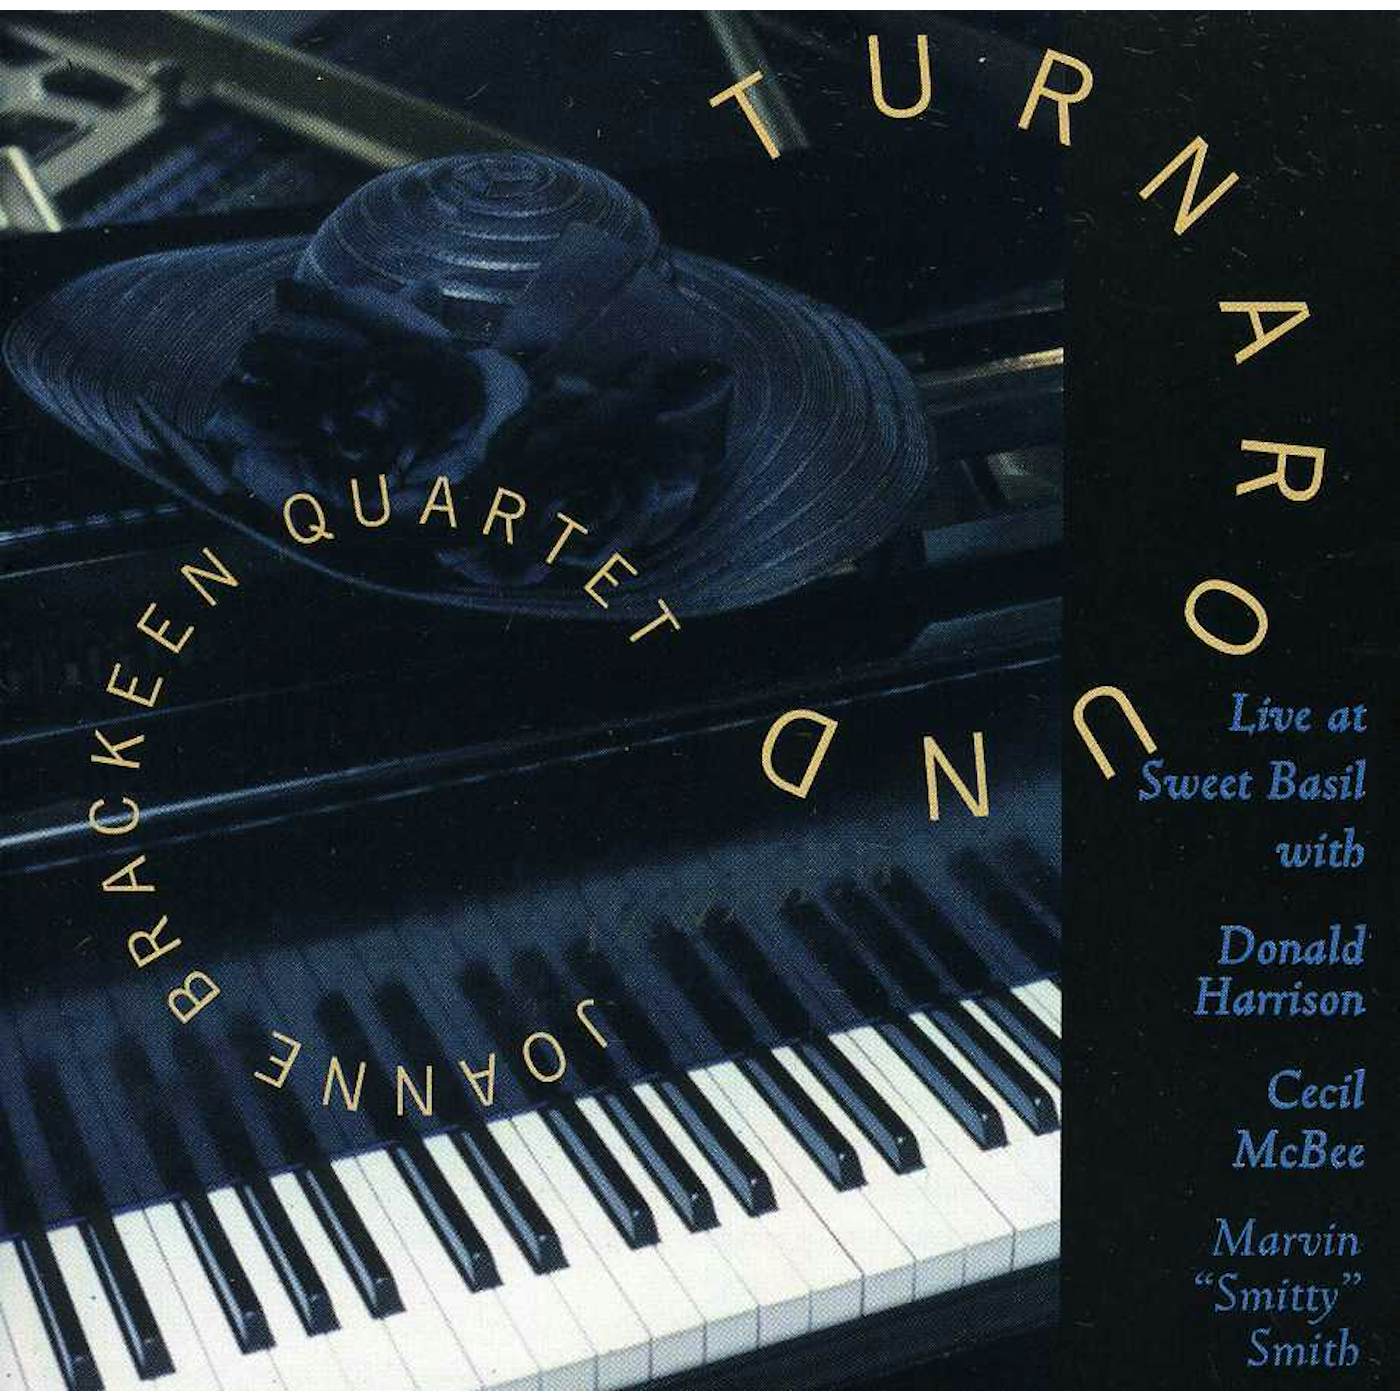 Joanne Brackeen TURNAROUND CD